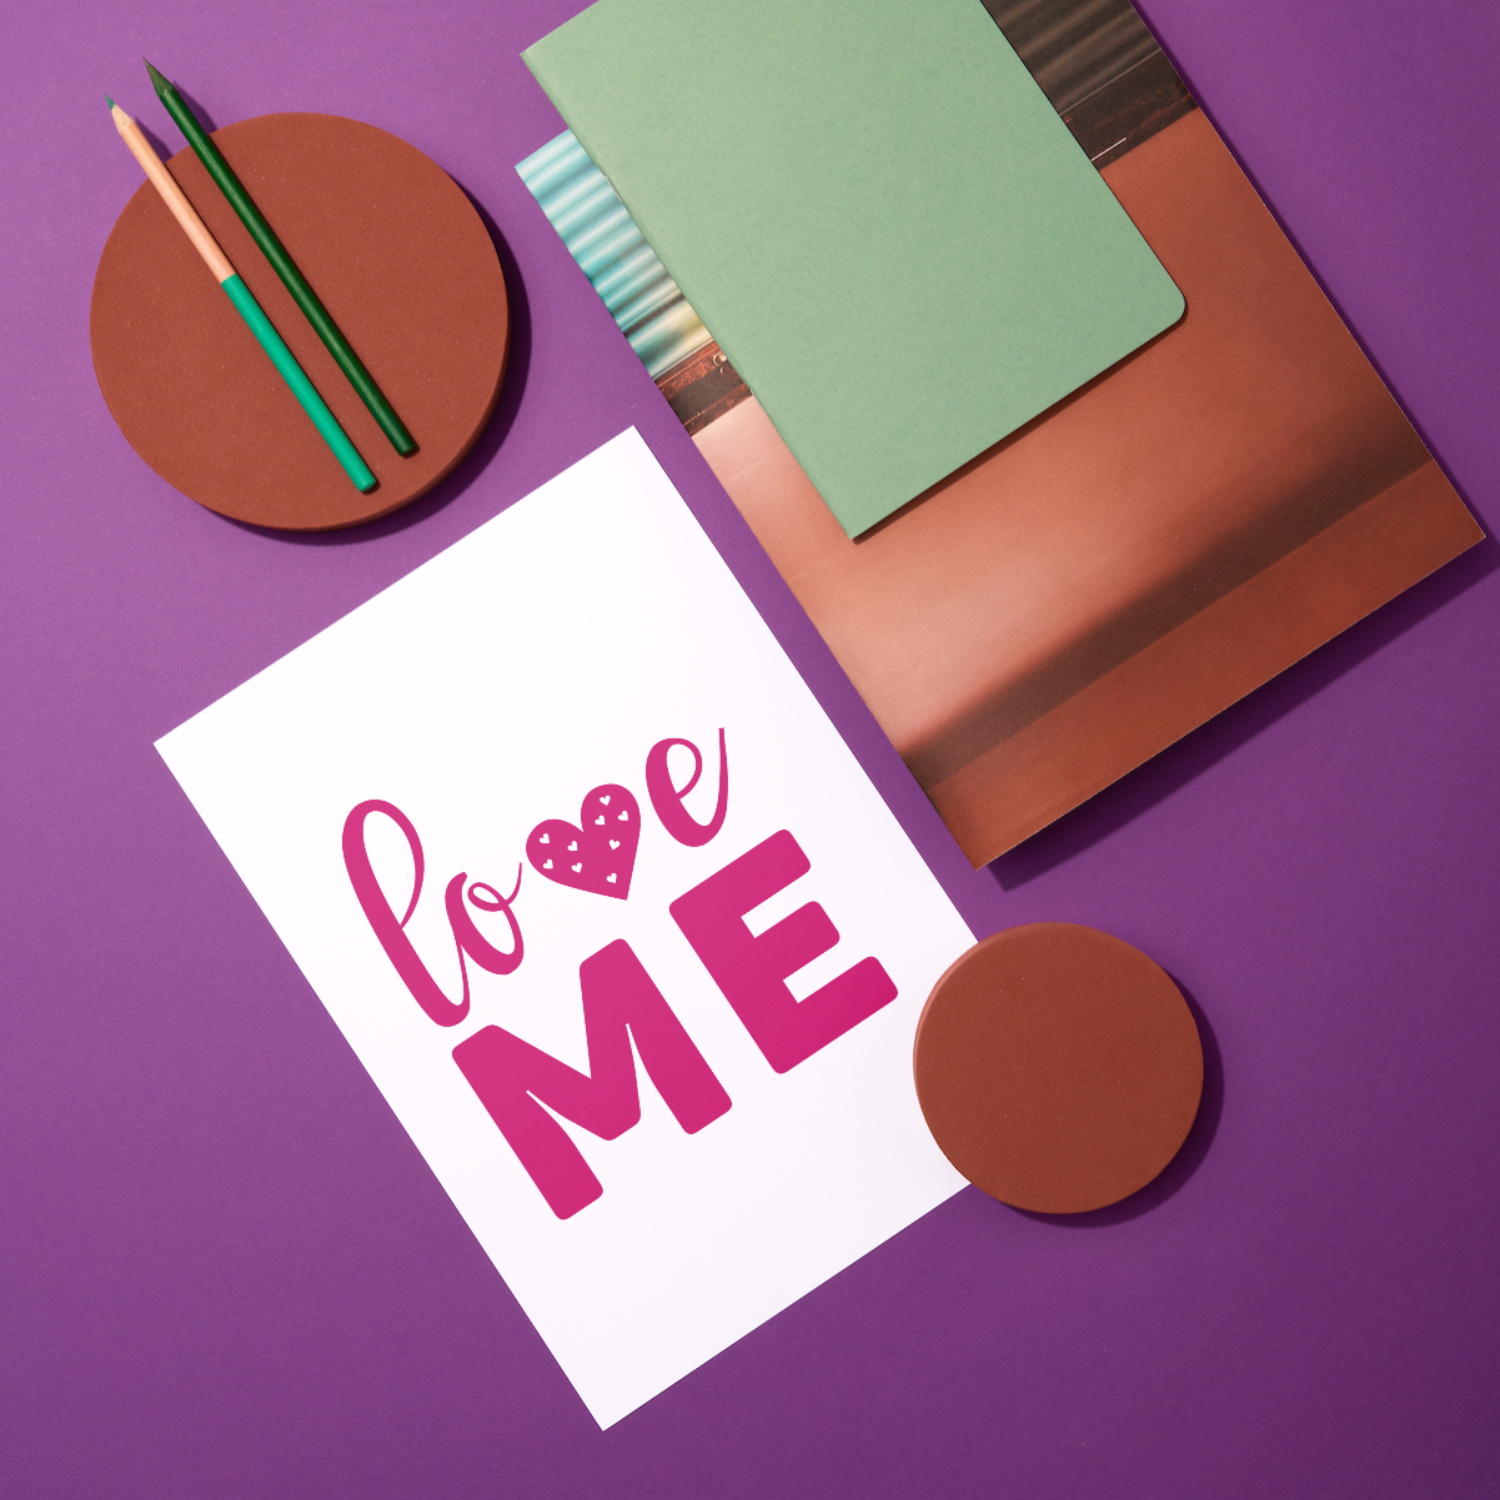 Love me SVG | Digital Download | Cut File | SVG Only The Sweet Stuff